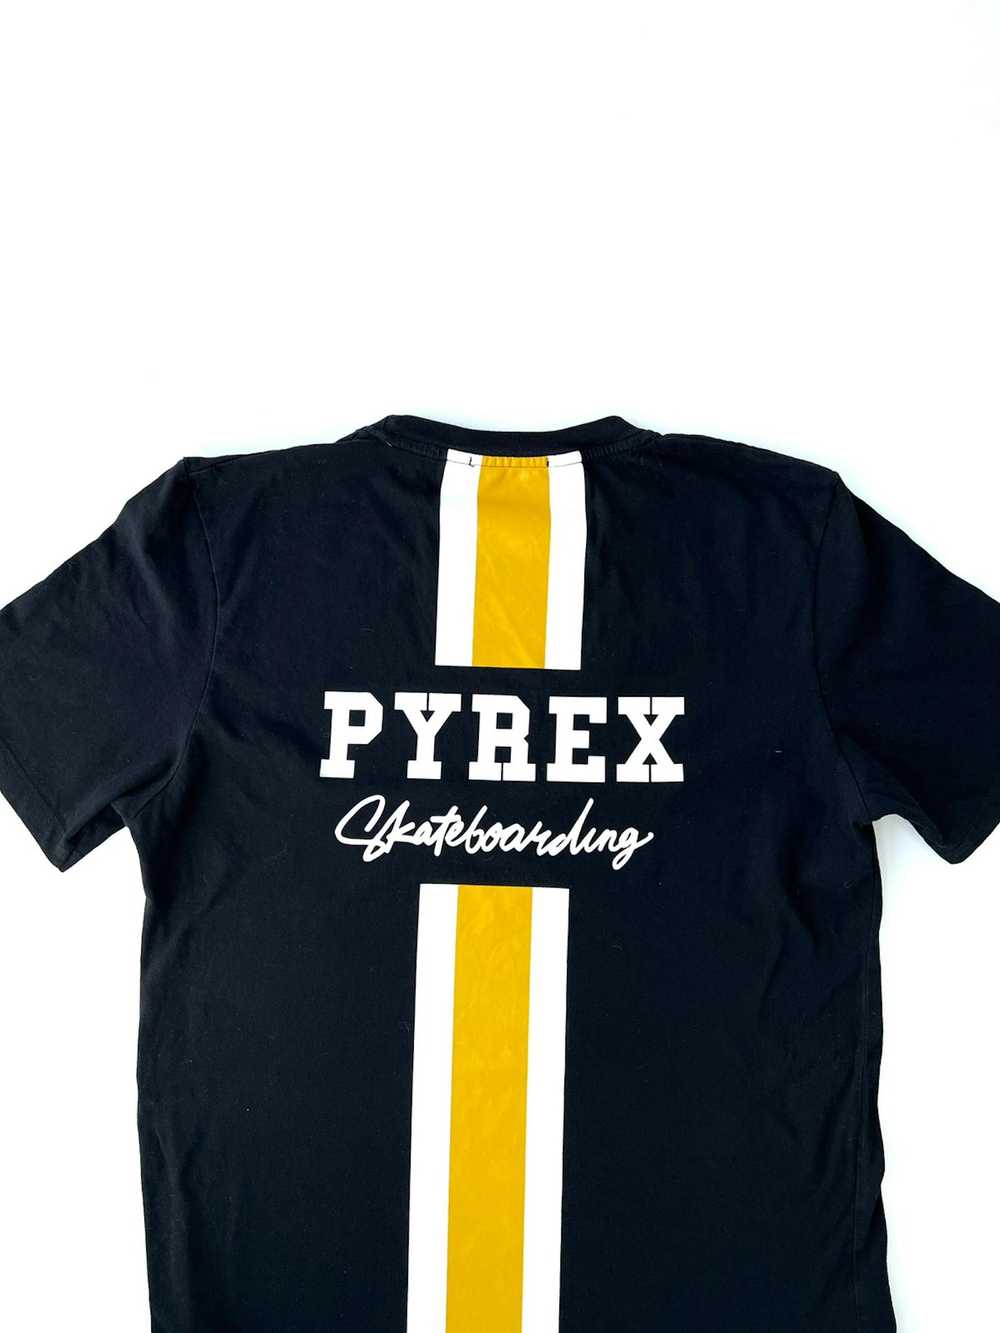 Pyrex Vision Pyrex Vision T-Shirt Big logo - image 3